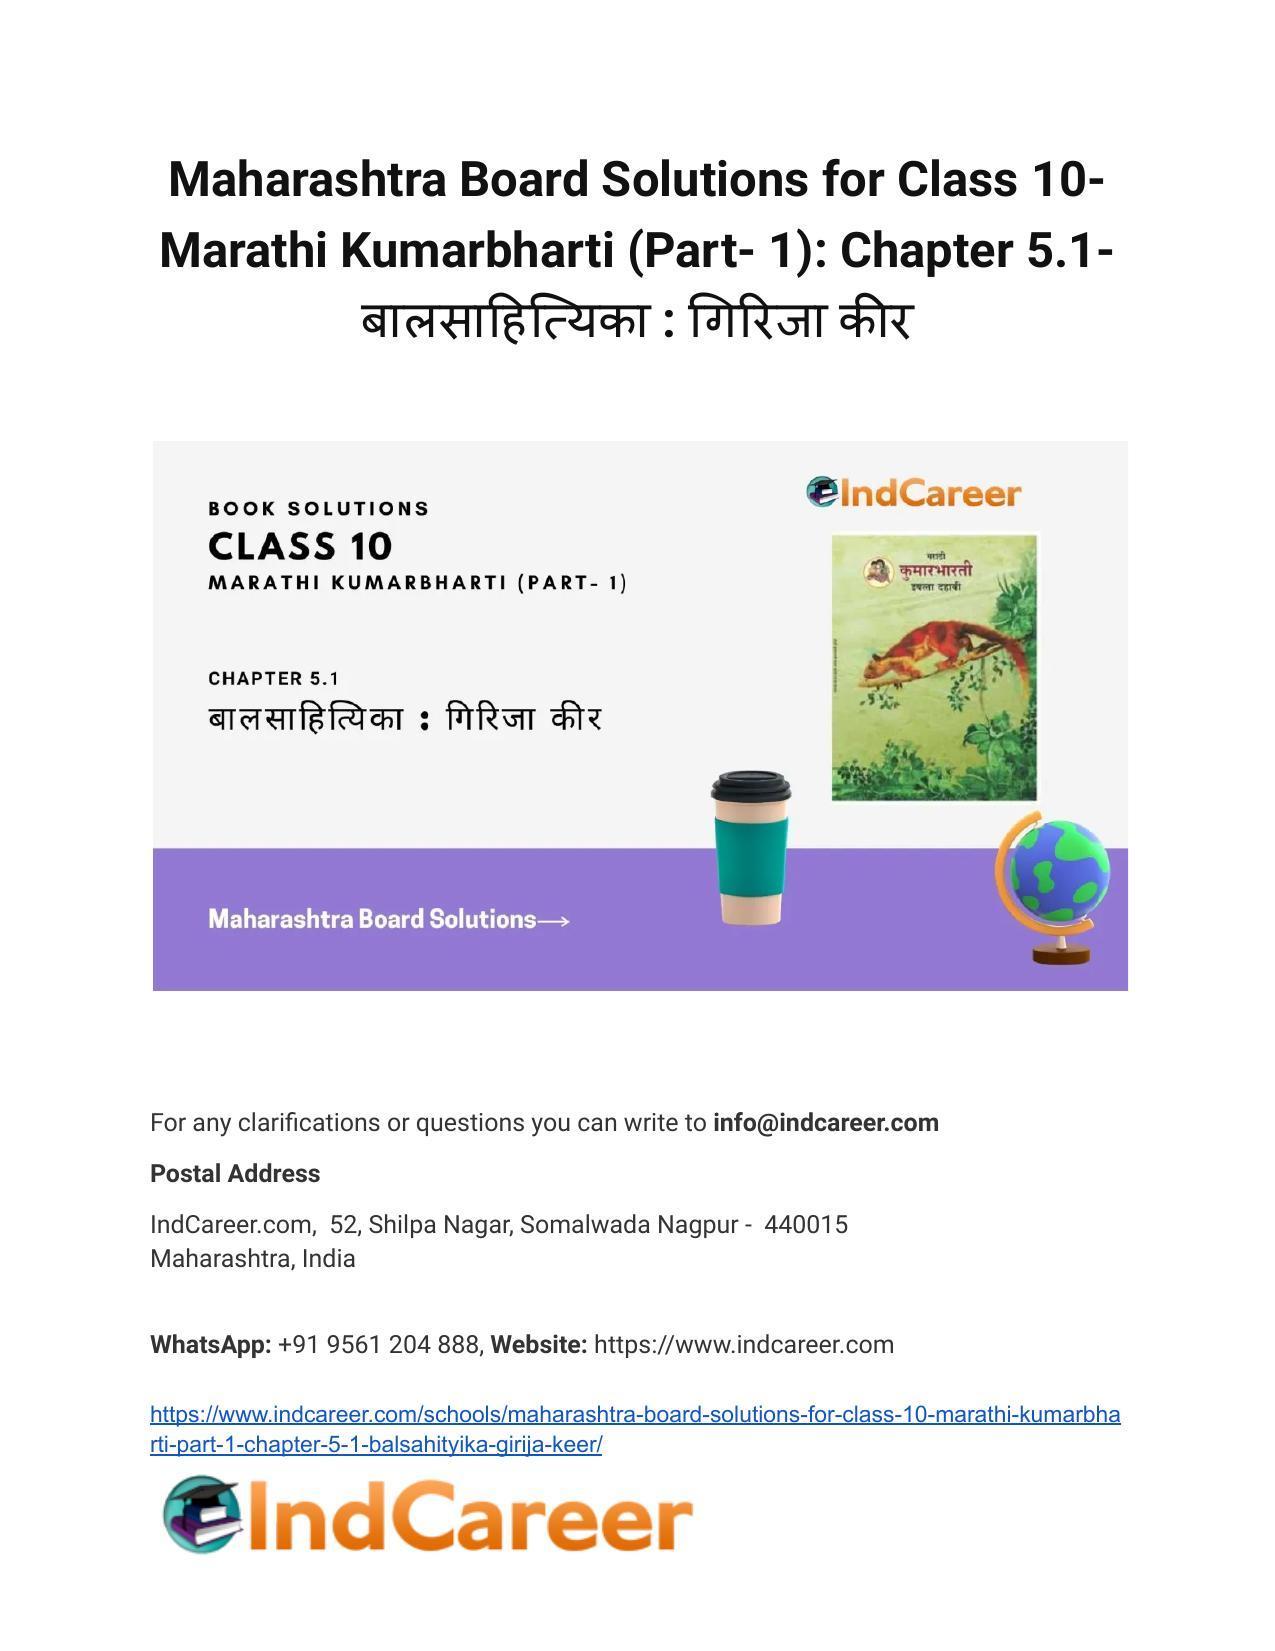 Maharashtra Board Solutions for Class 10- Marathi Kumarbharti (Part- 1): Chapter 5.1- बालसाहित्यिका : गिरिजा कीर - Page 1